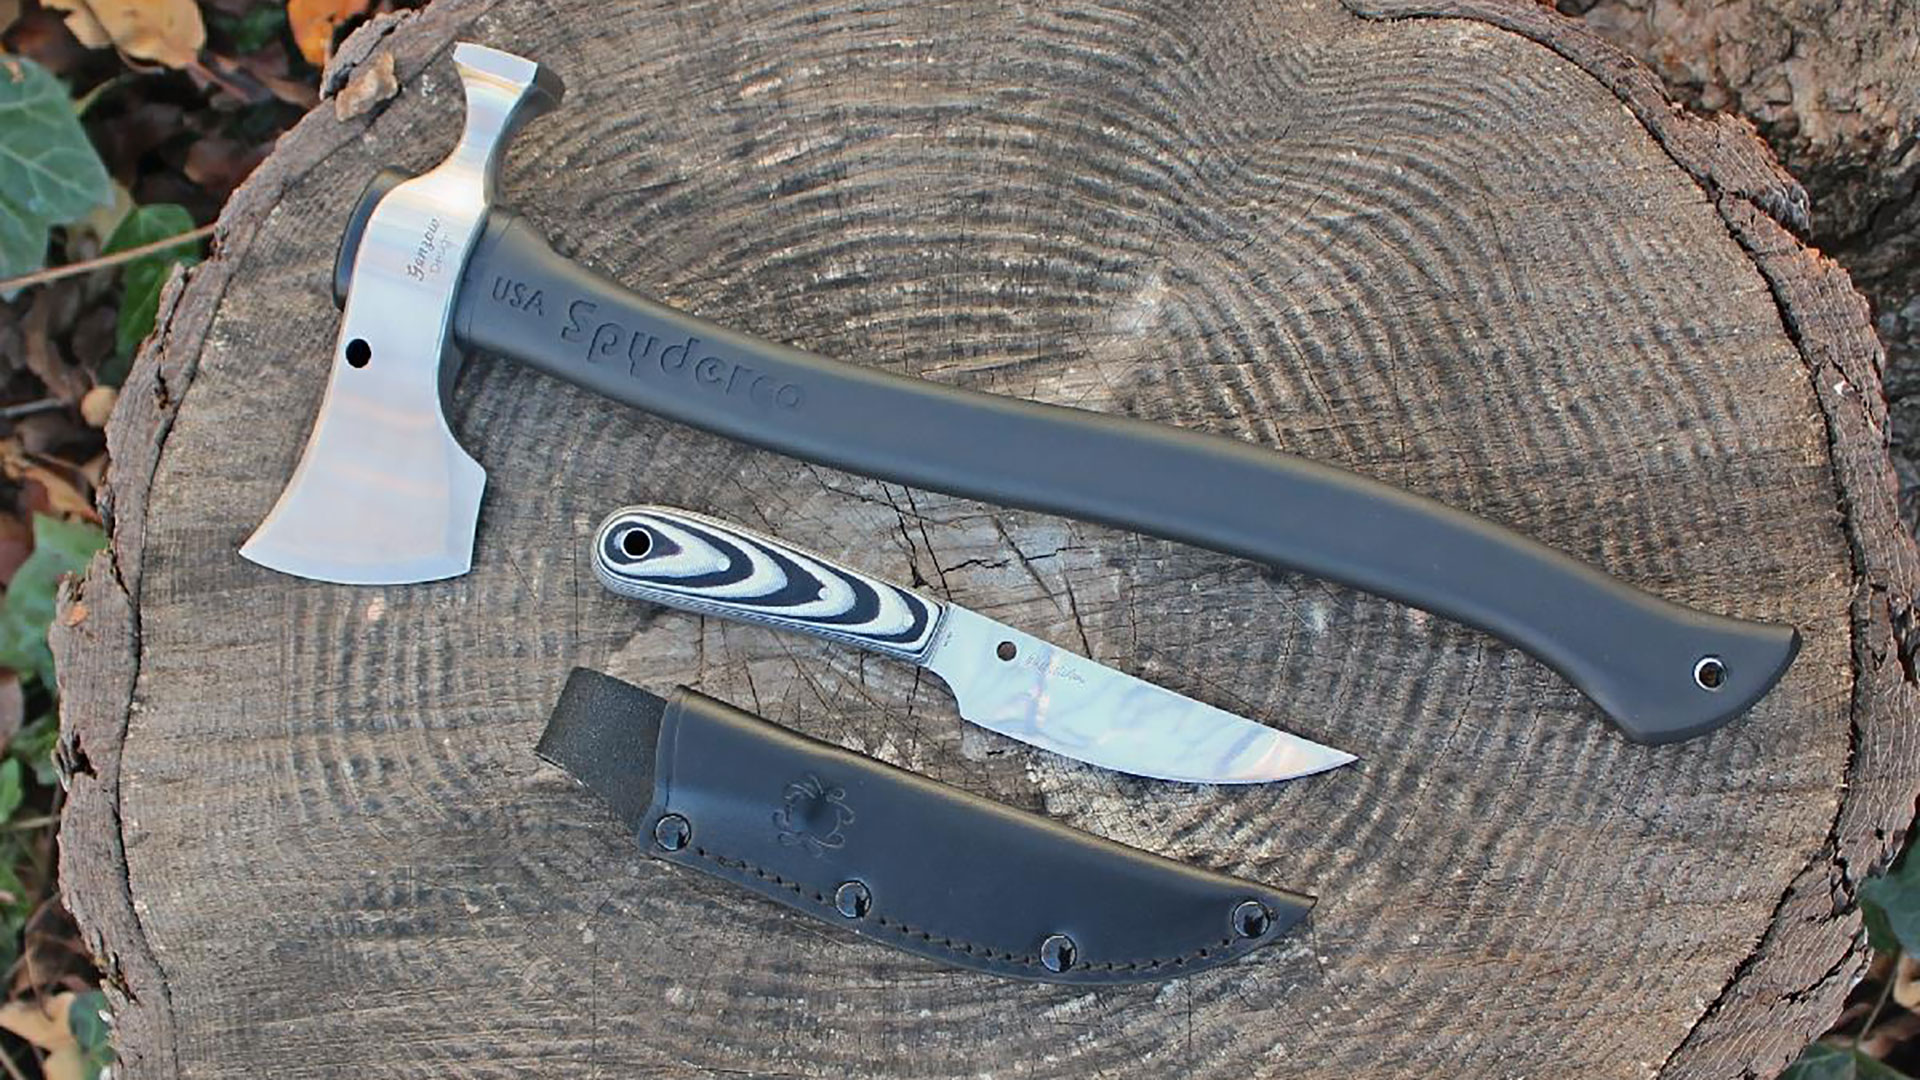 Stone River Ceramic Folding Knife & Tactical Flashlight Gift Set